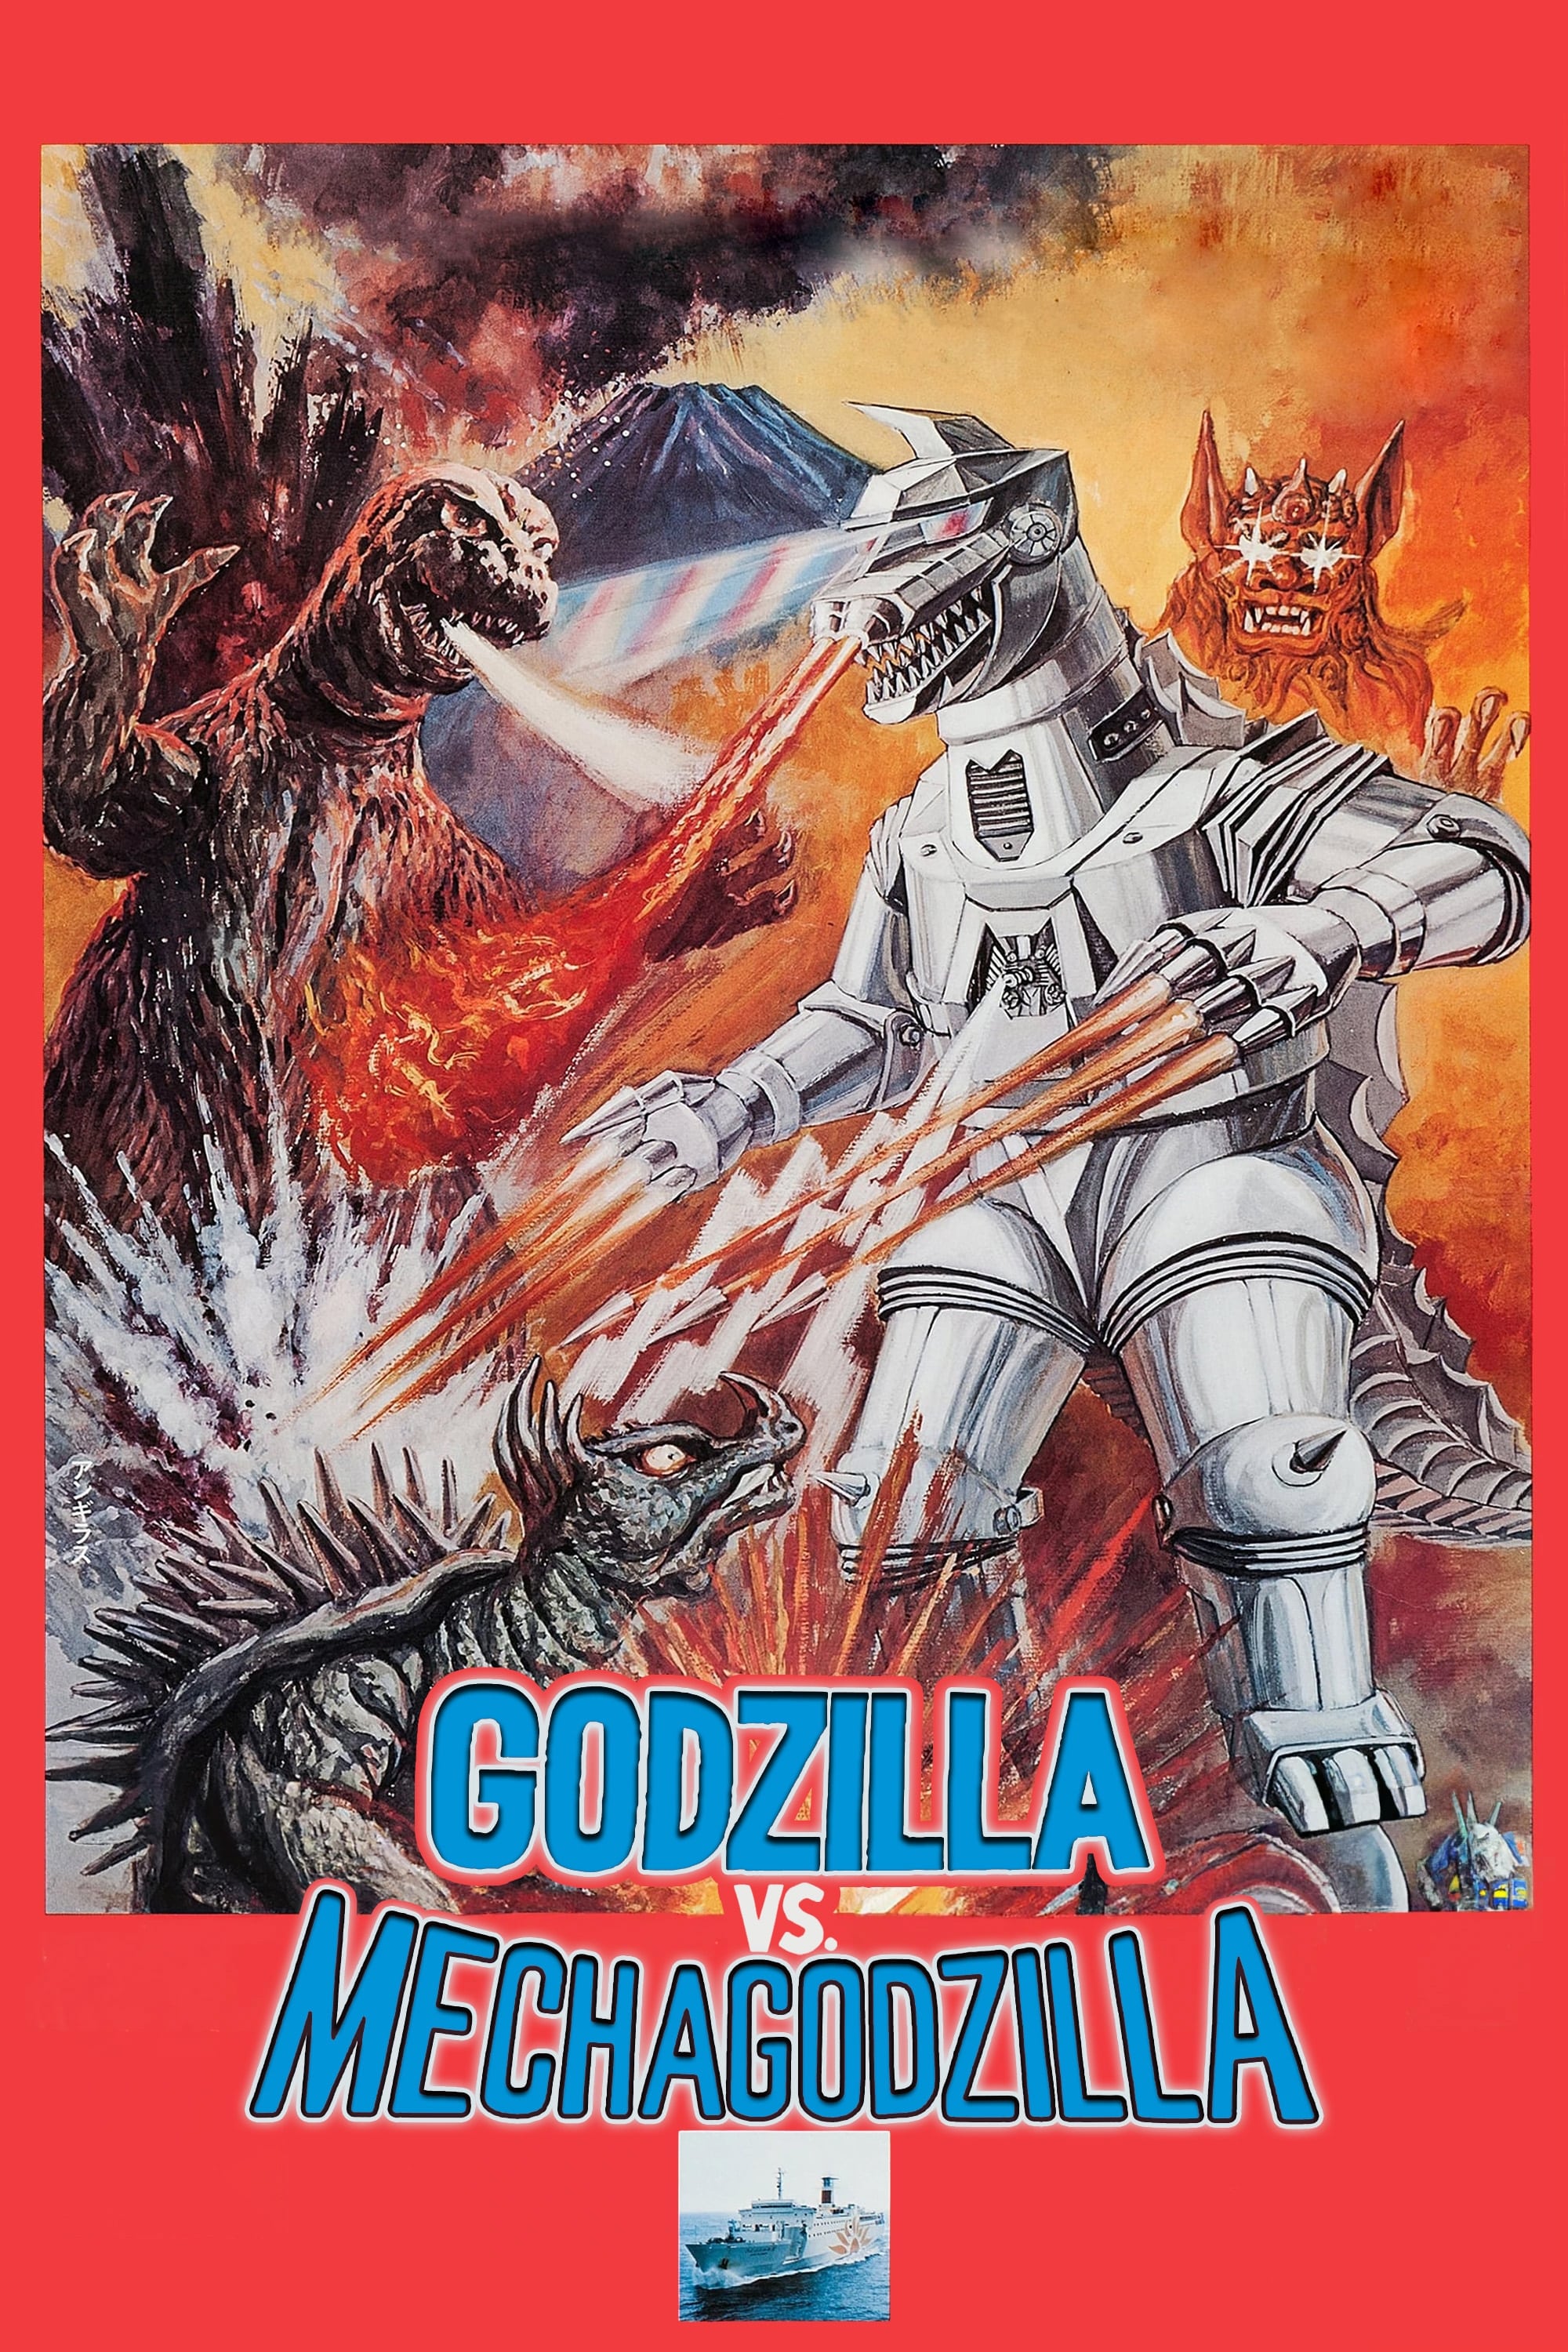 Godzilla contra Cibergodzilla, máquina de destrucción (1974)